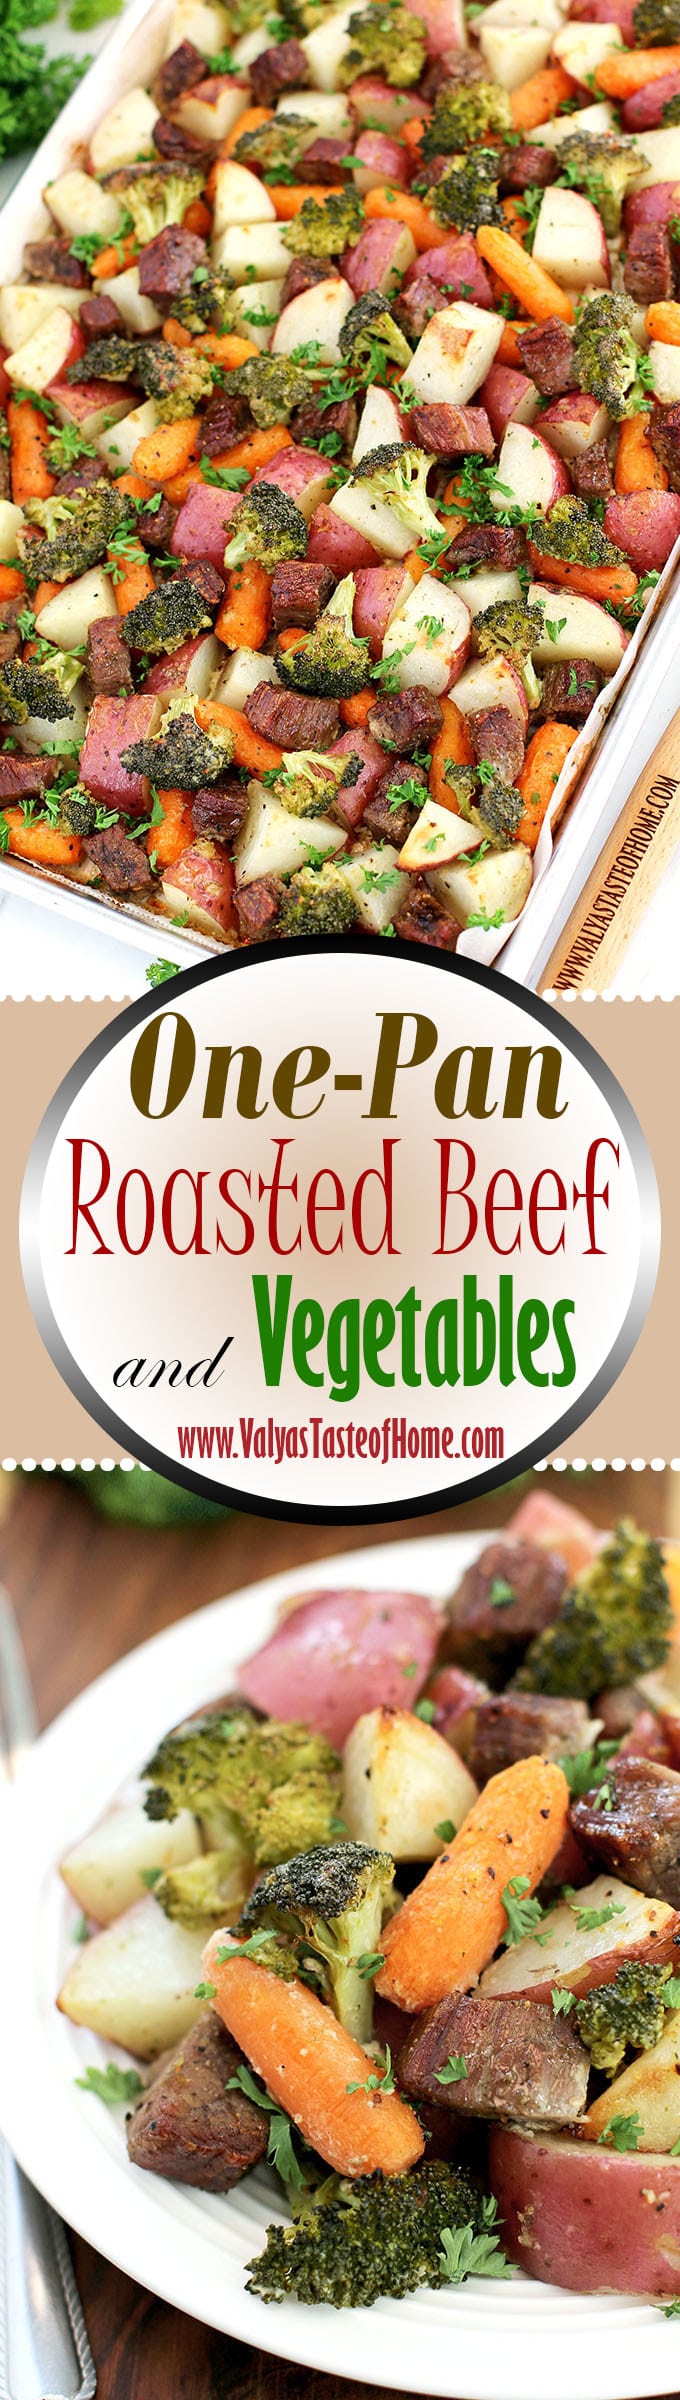 One-Pan Roasted Beef and Vegetables Recipe - Valya's Taste of Home